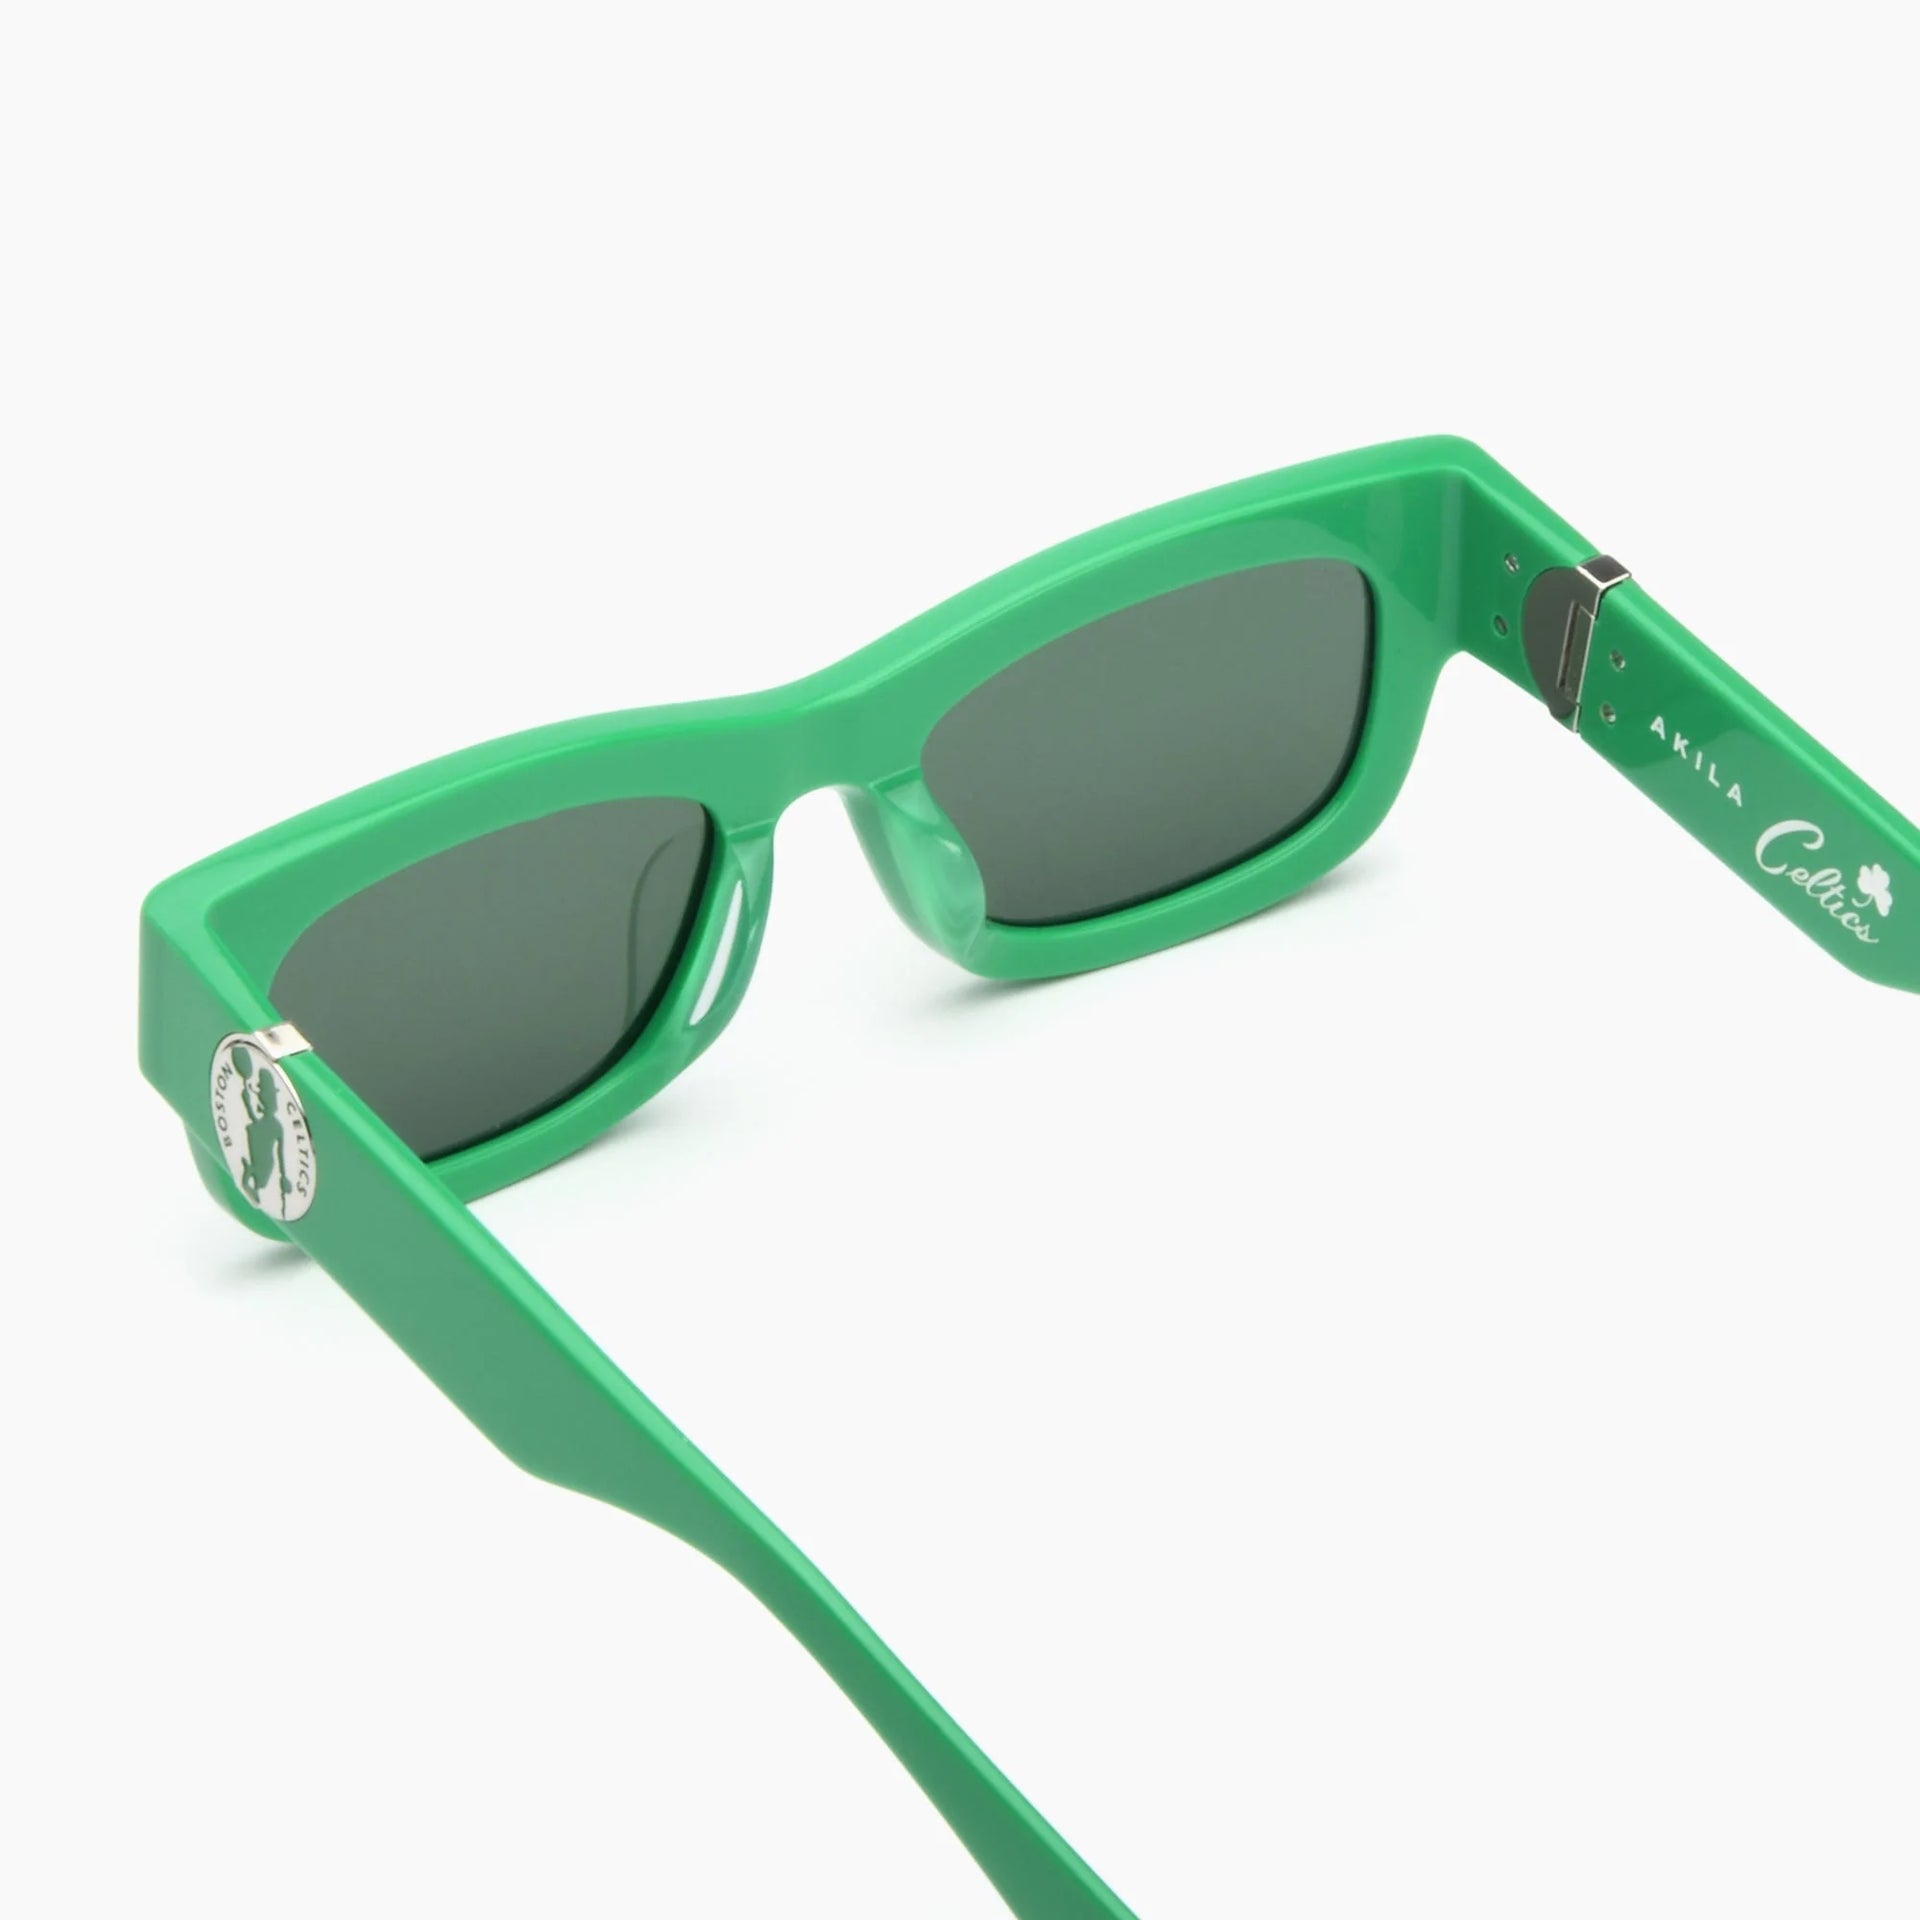 Jubilee x Boston Celtics Sunglasses - Celtics Green/Black